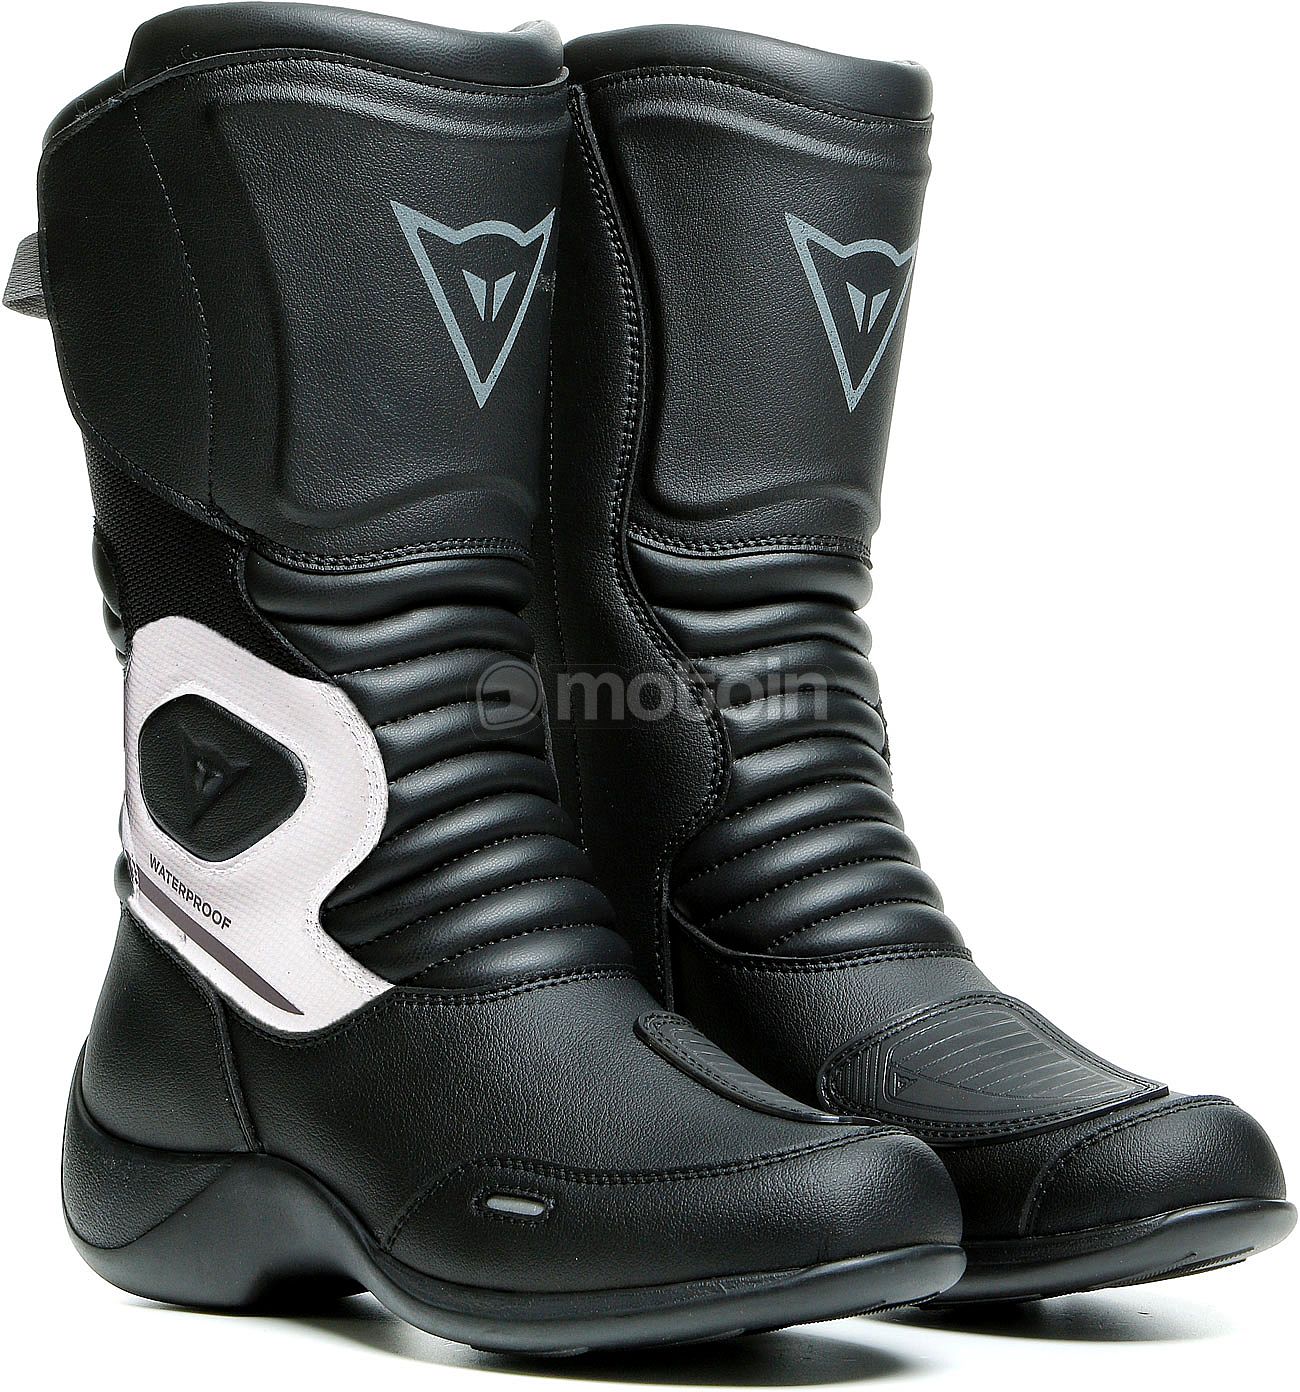 Dainese Aurora, boots waterproof women